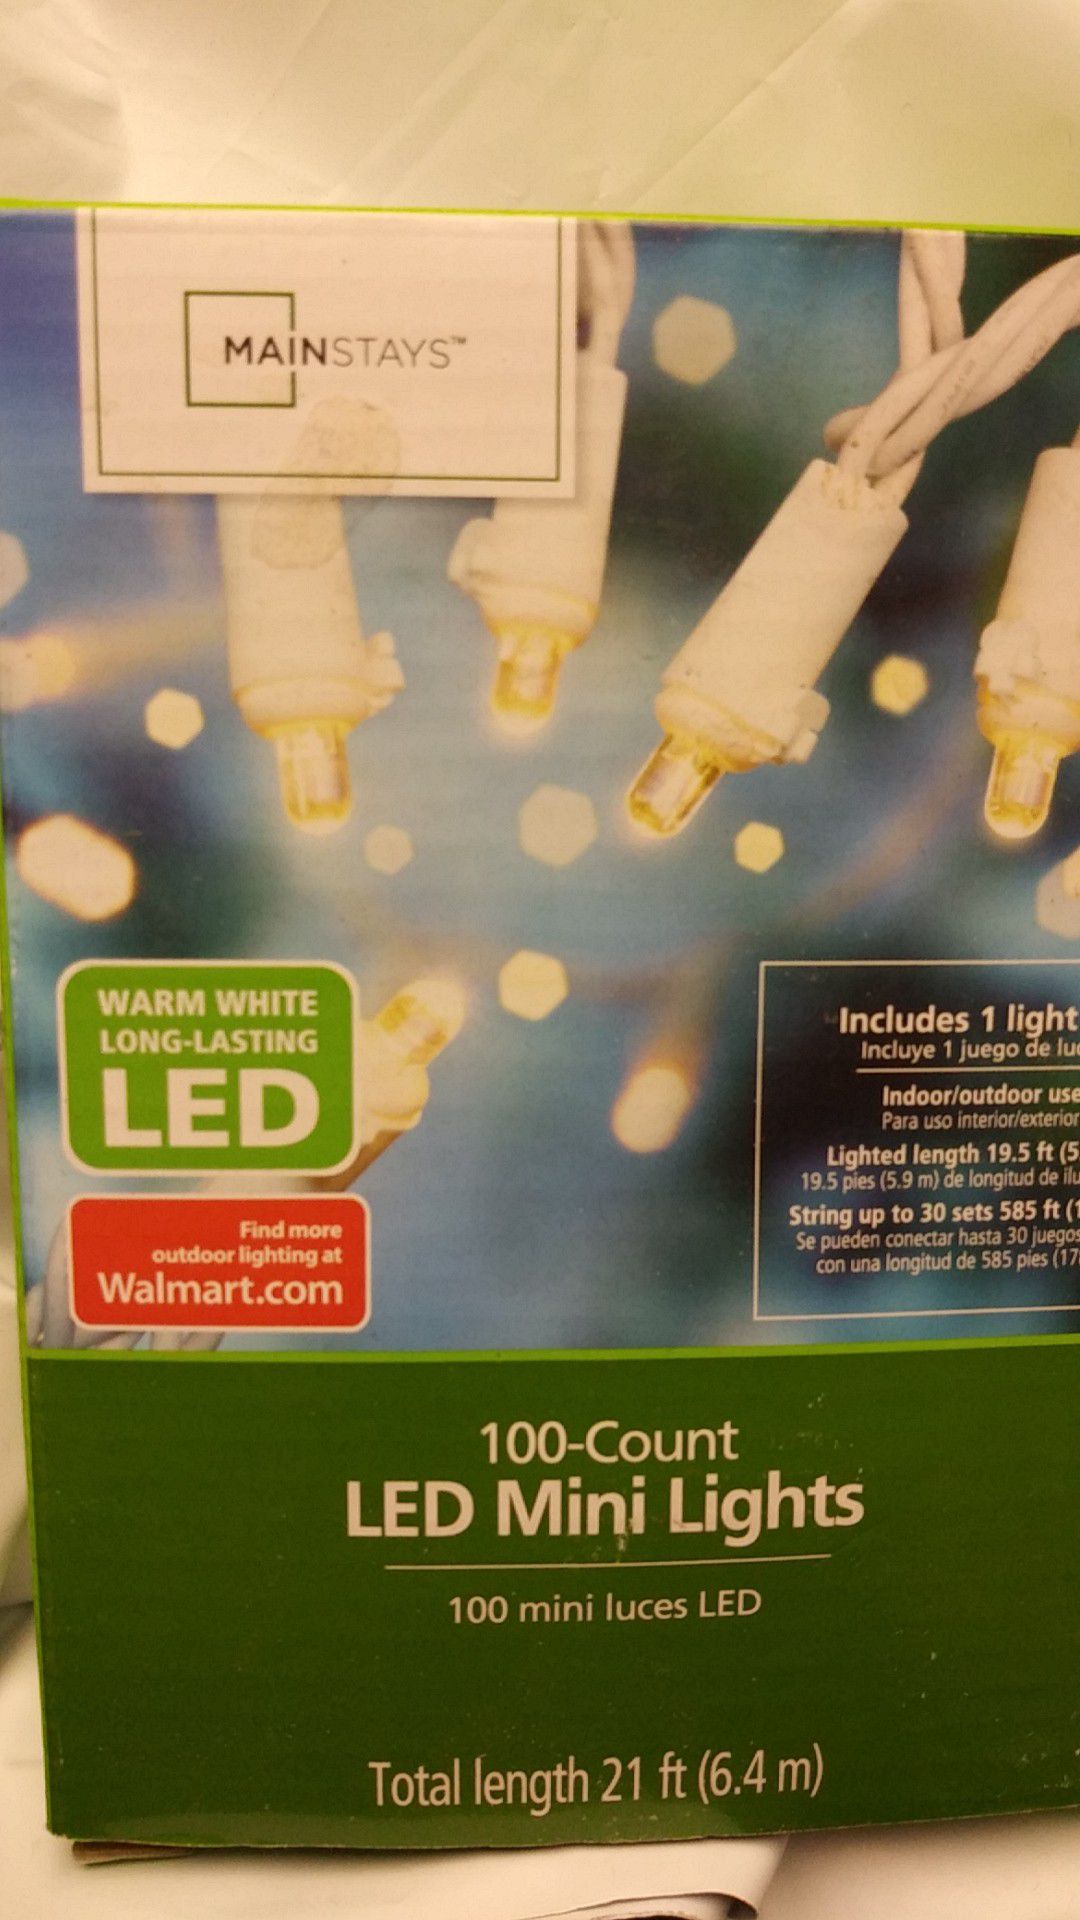 Led mini lights